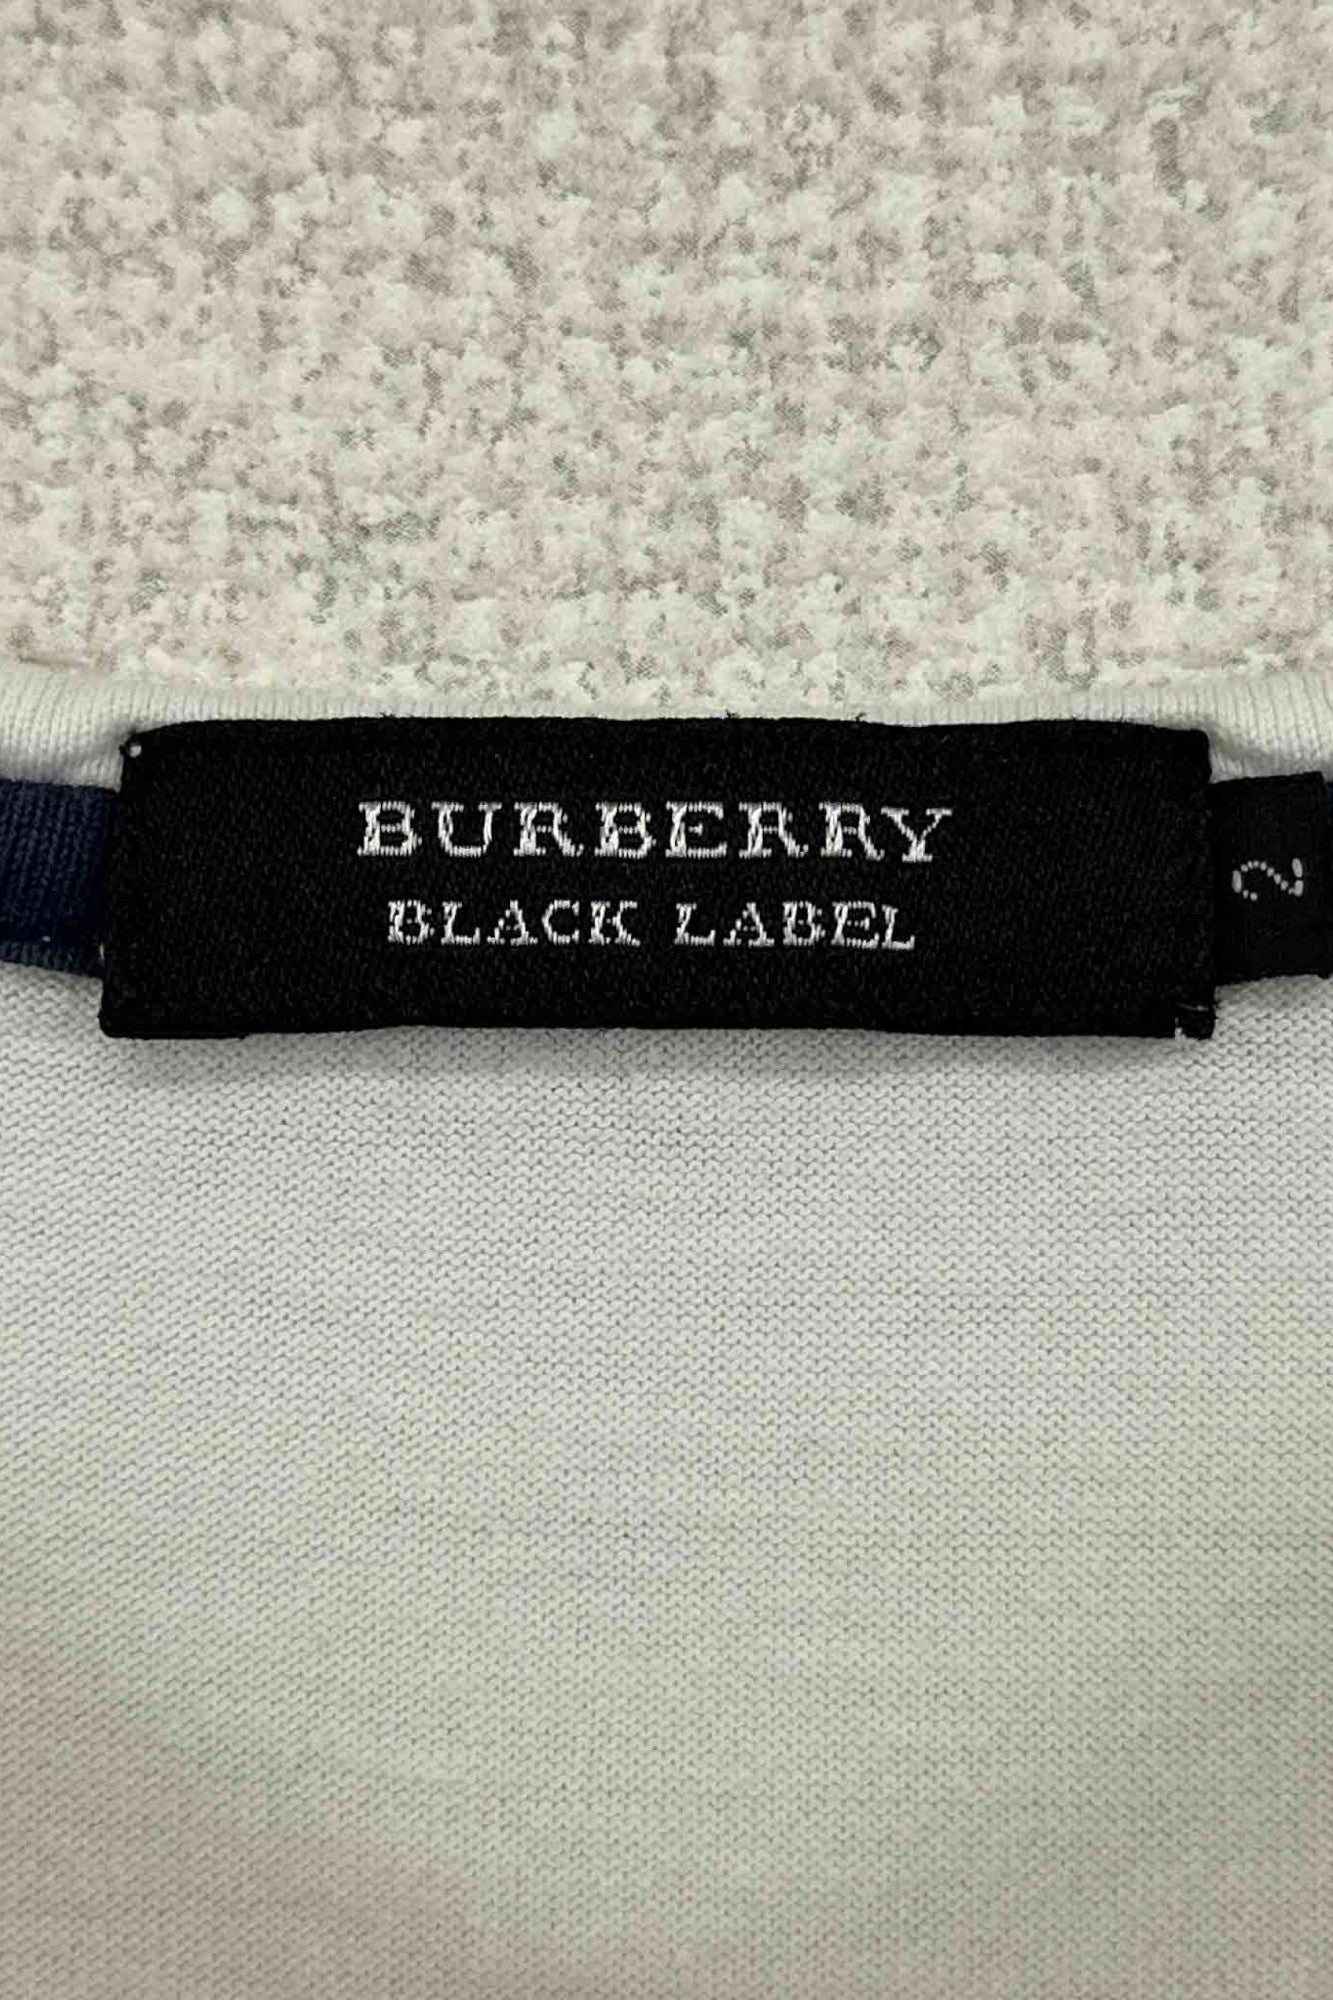 BURBERRY BLACK LABEL white T-shirt